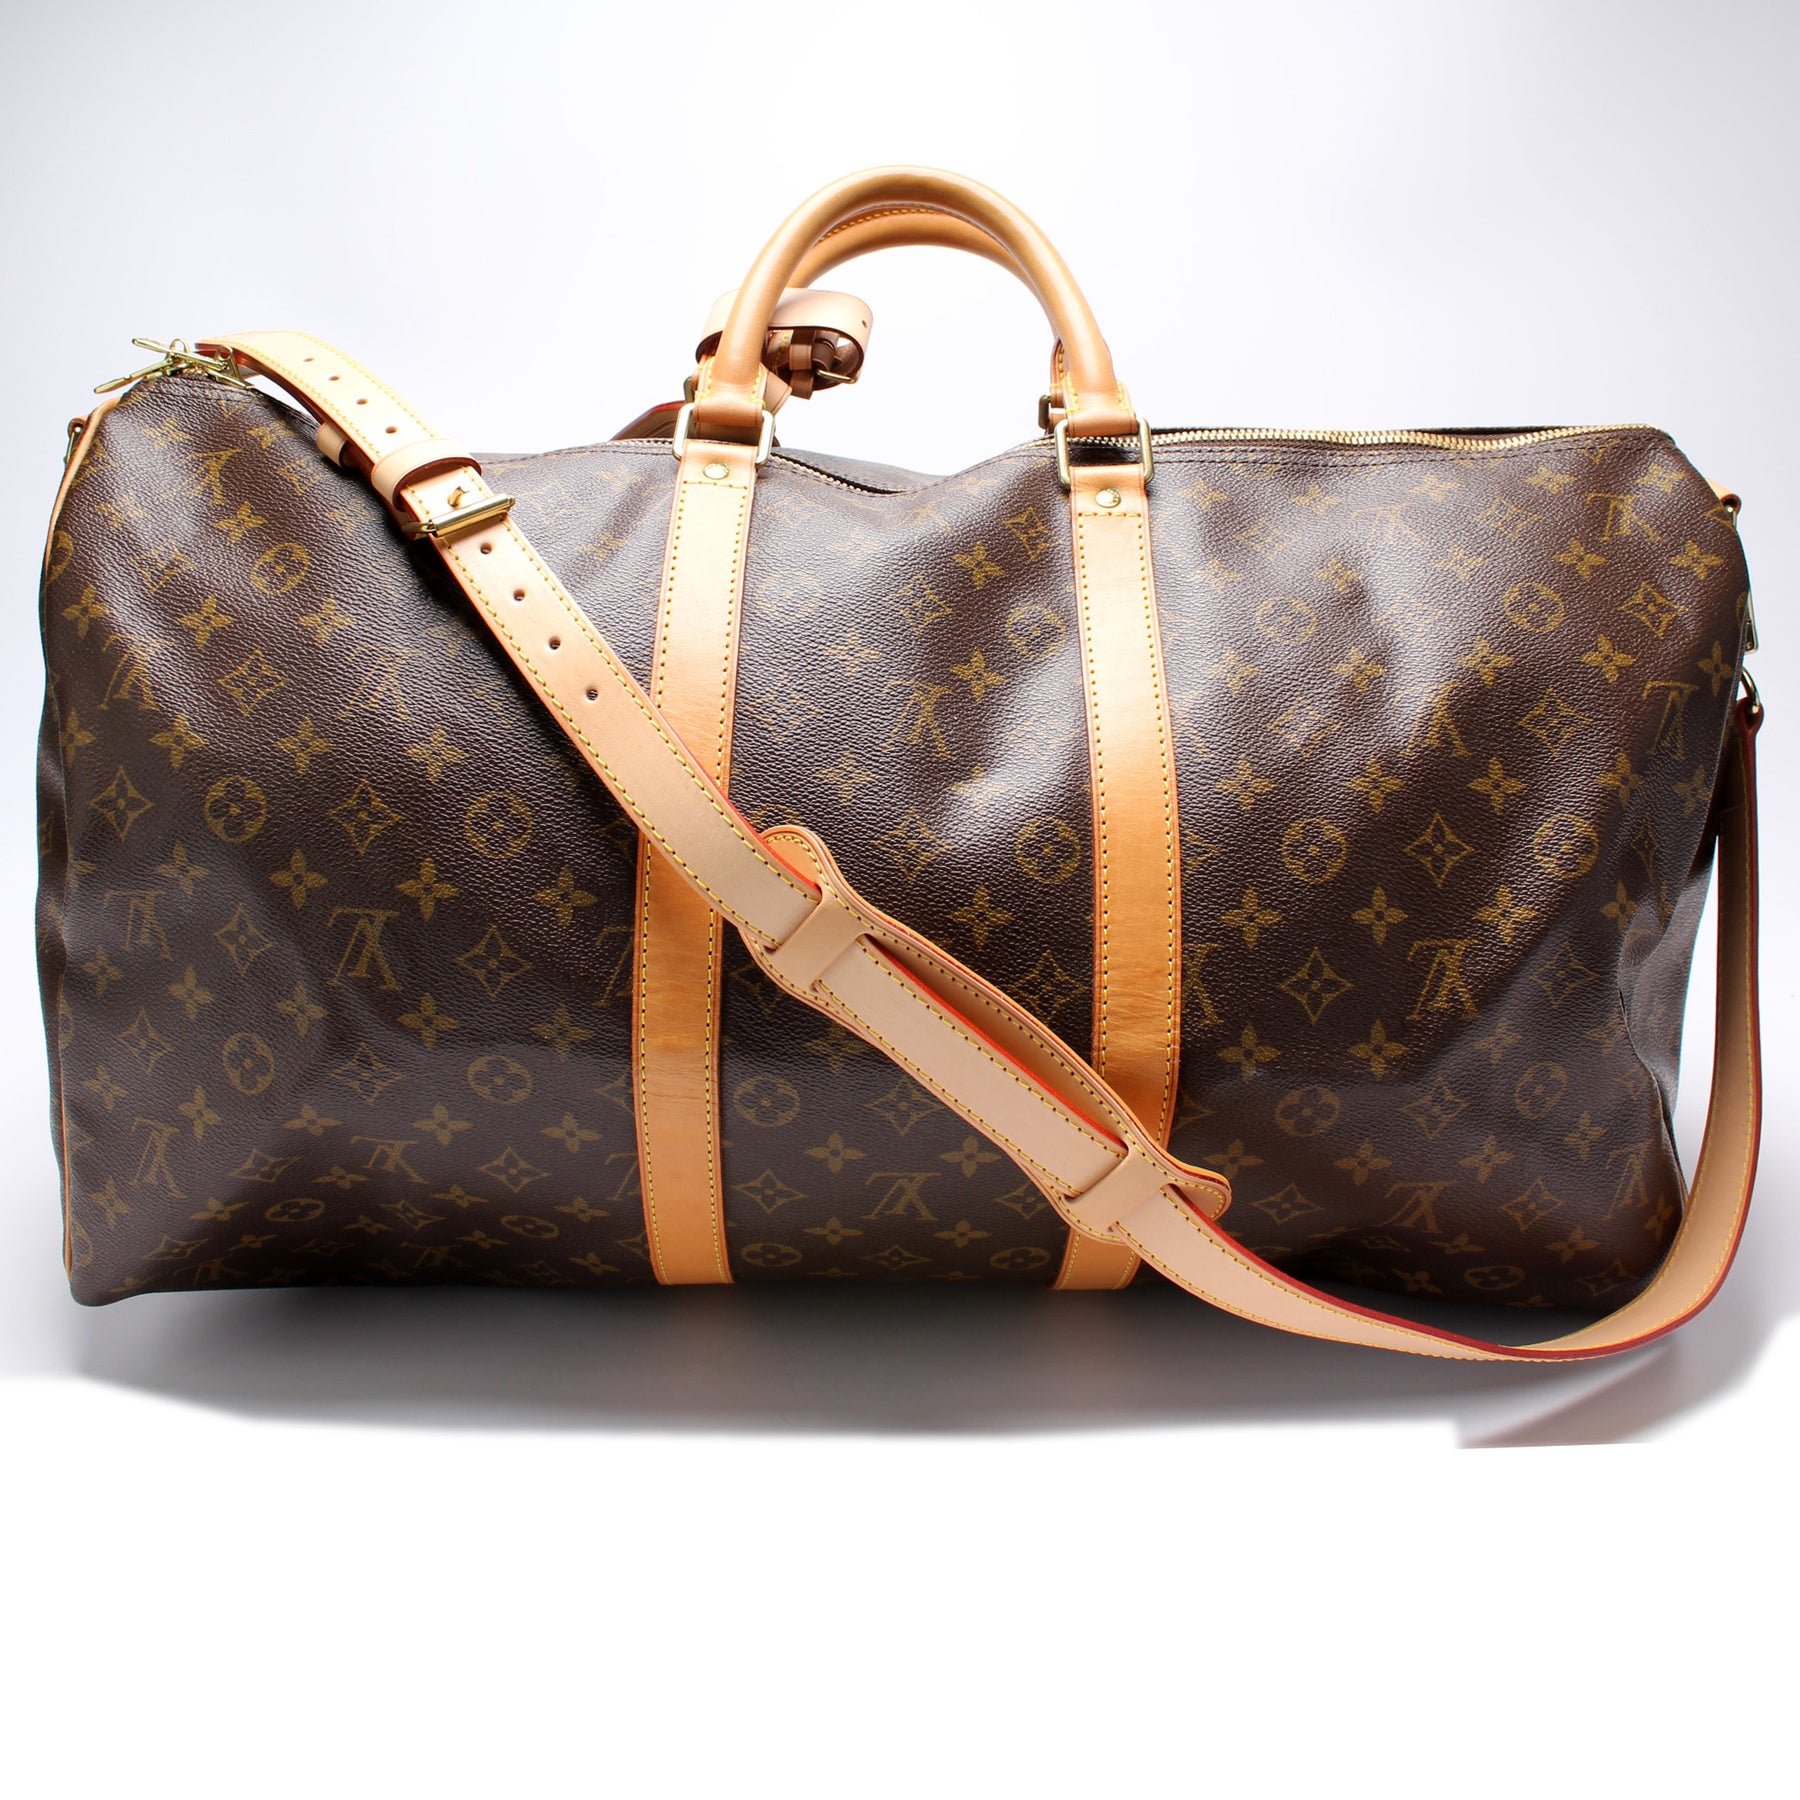 Louis Vuitton Keepall 55 Bandouliere in Monogram Handbag - Authentic Pre-Owned Designer Handbags